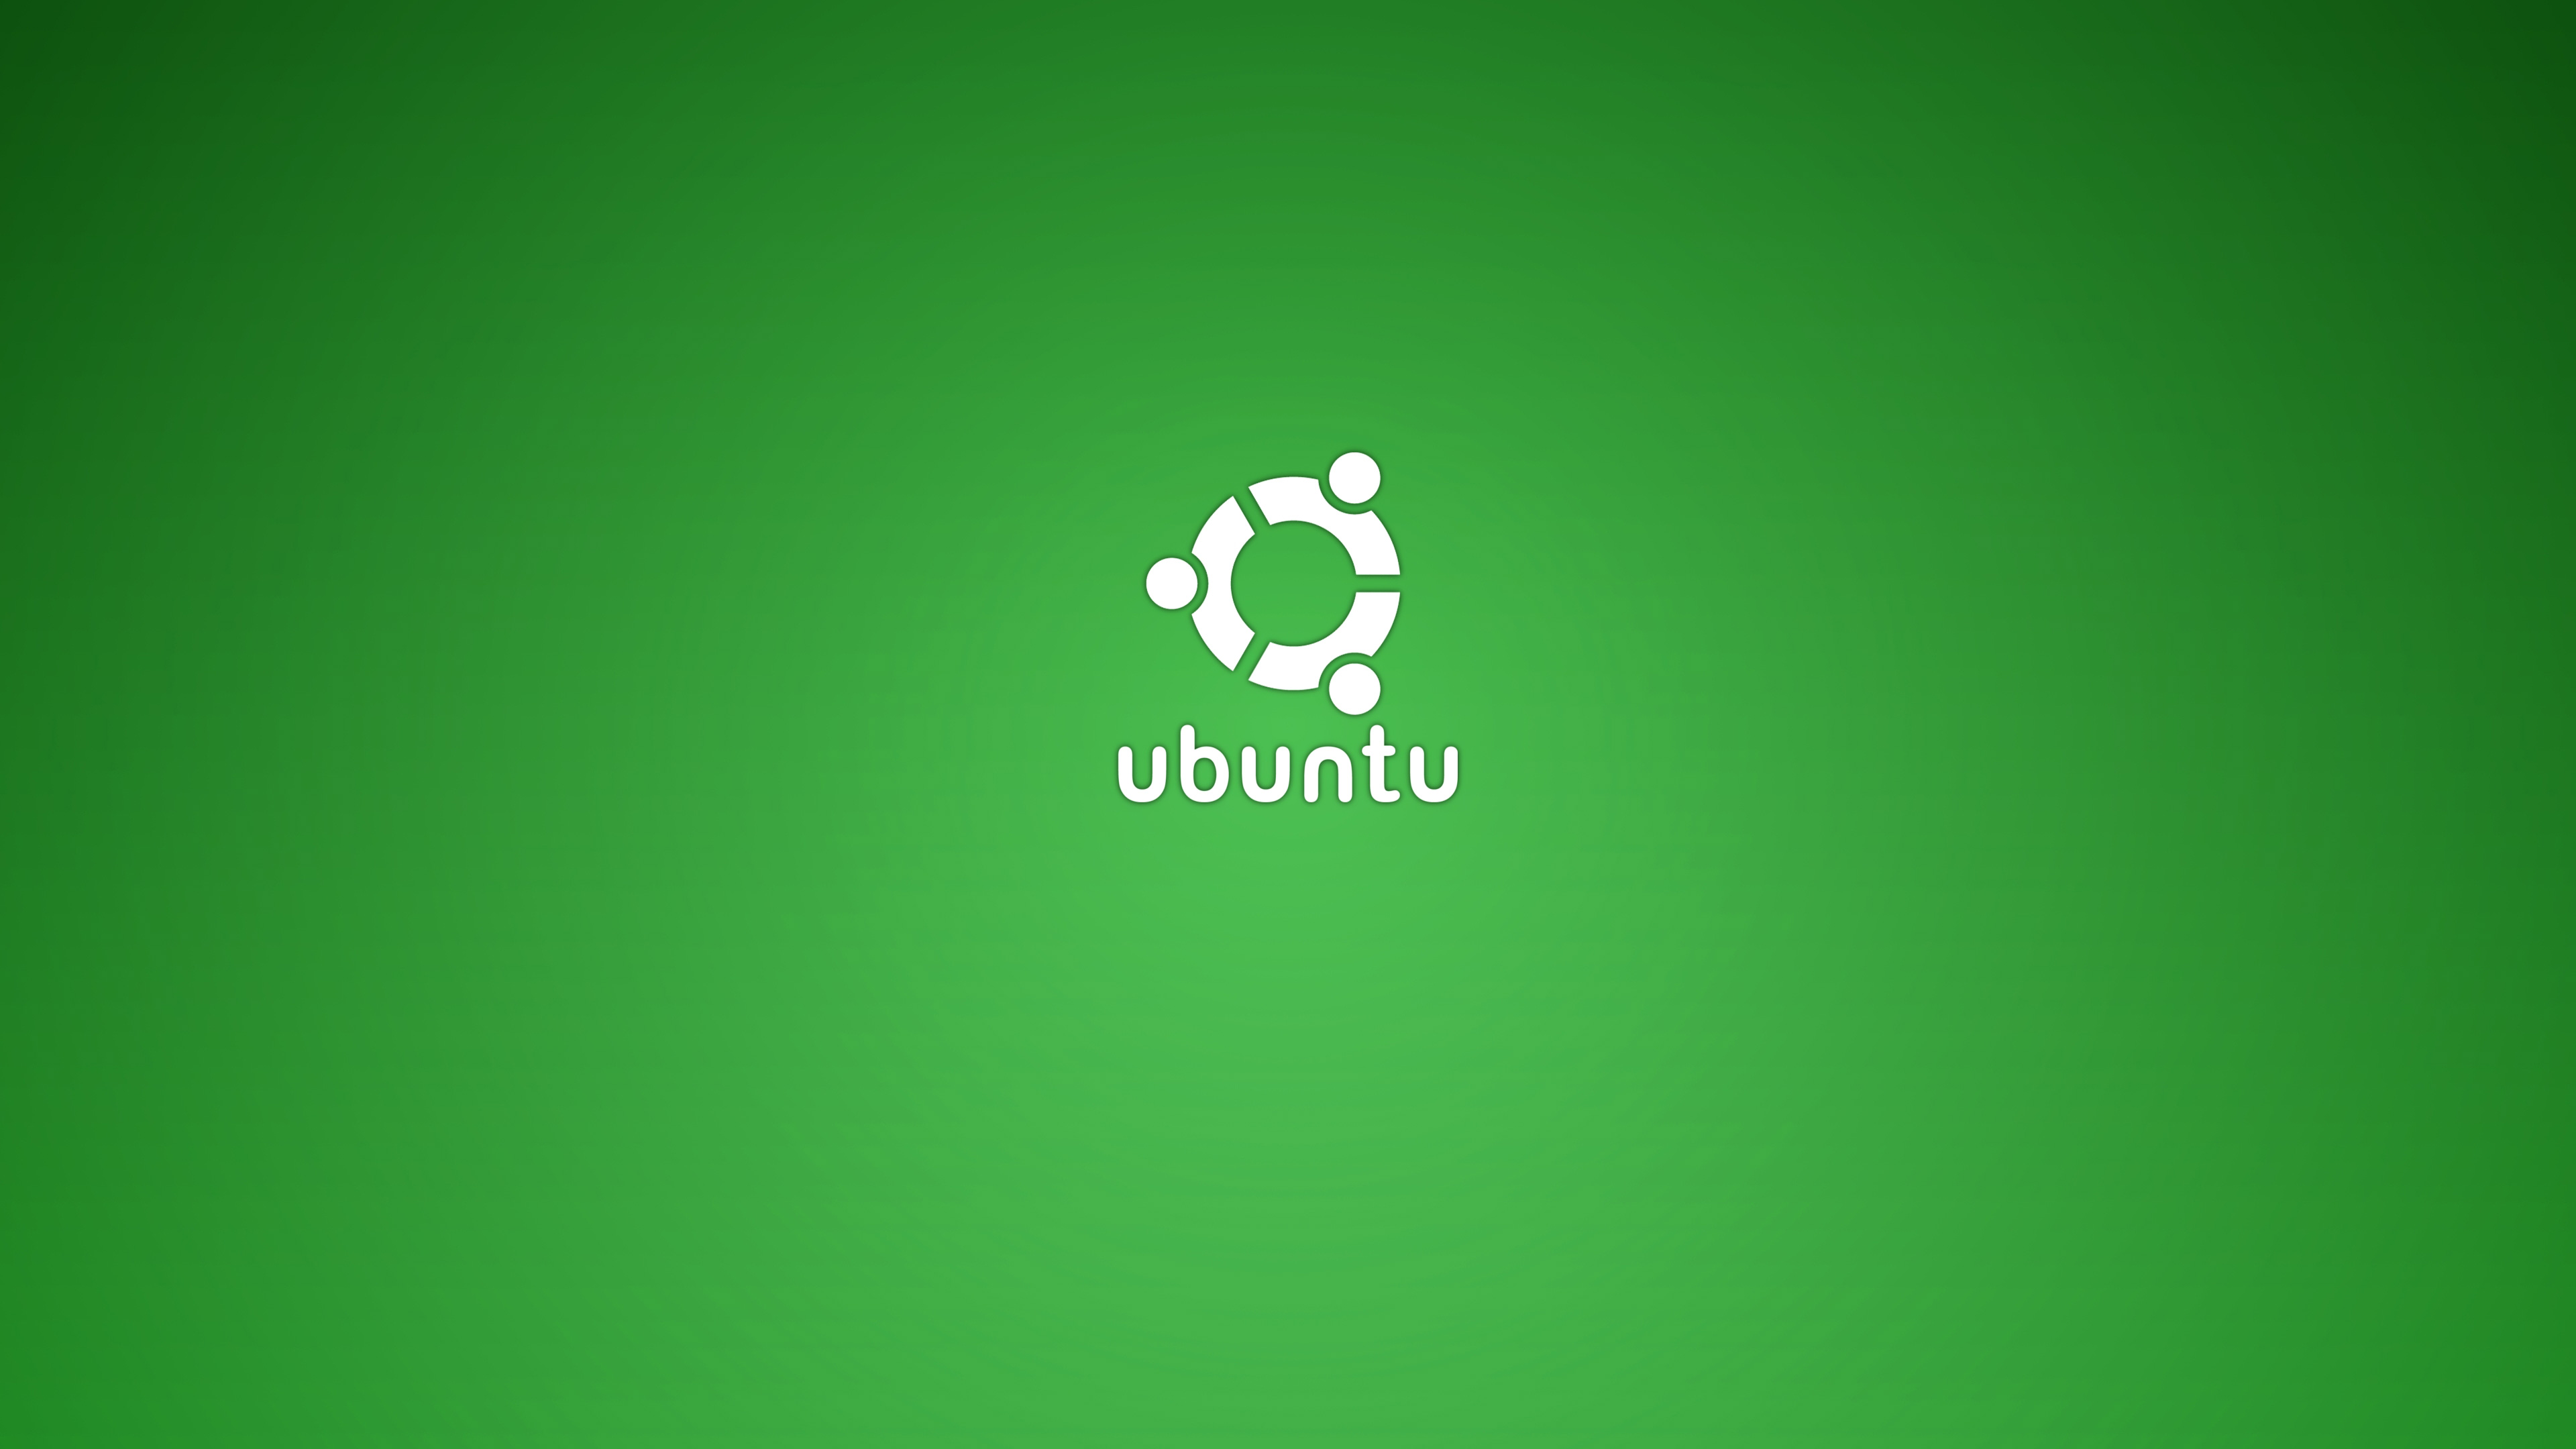 sfondo di ubuntu,verde,font,testo,grafica,sistema operativo